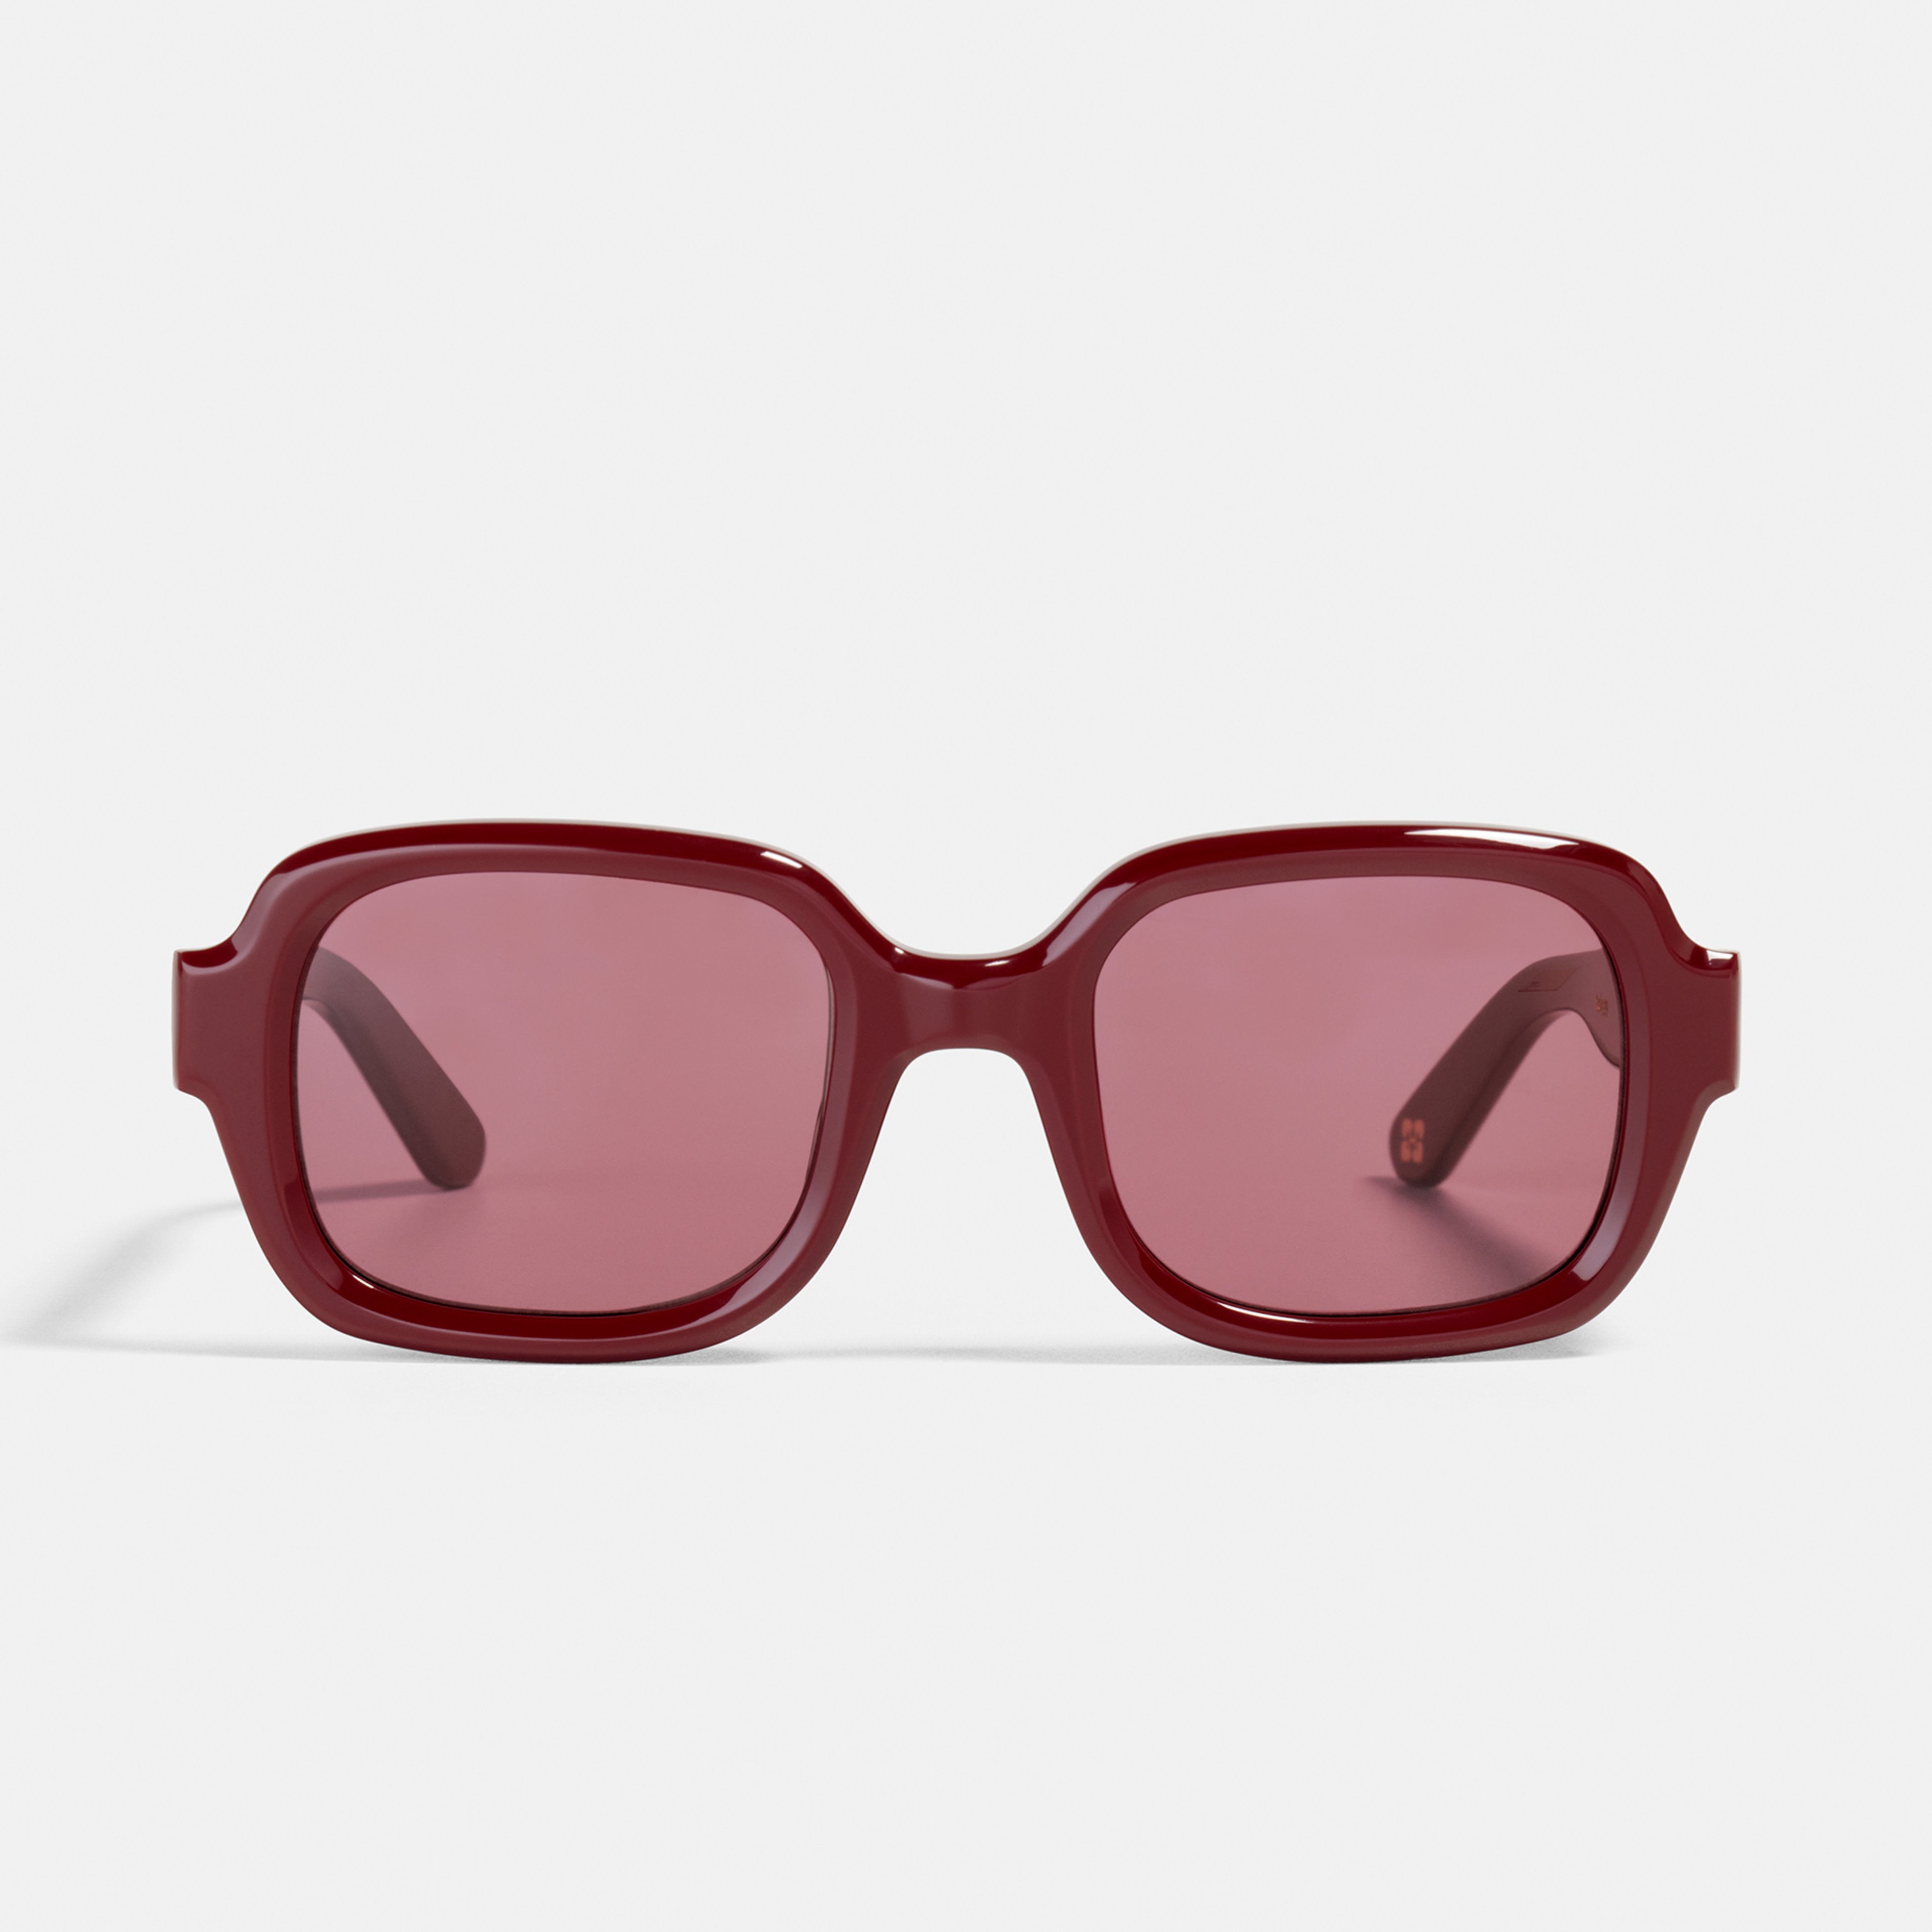 Ace & Tate Sonnenbrillen | Quadratisch Acetat in Violett, Rot